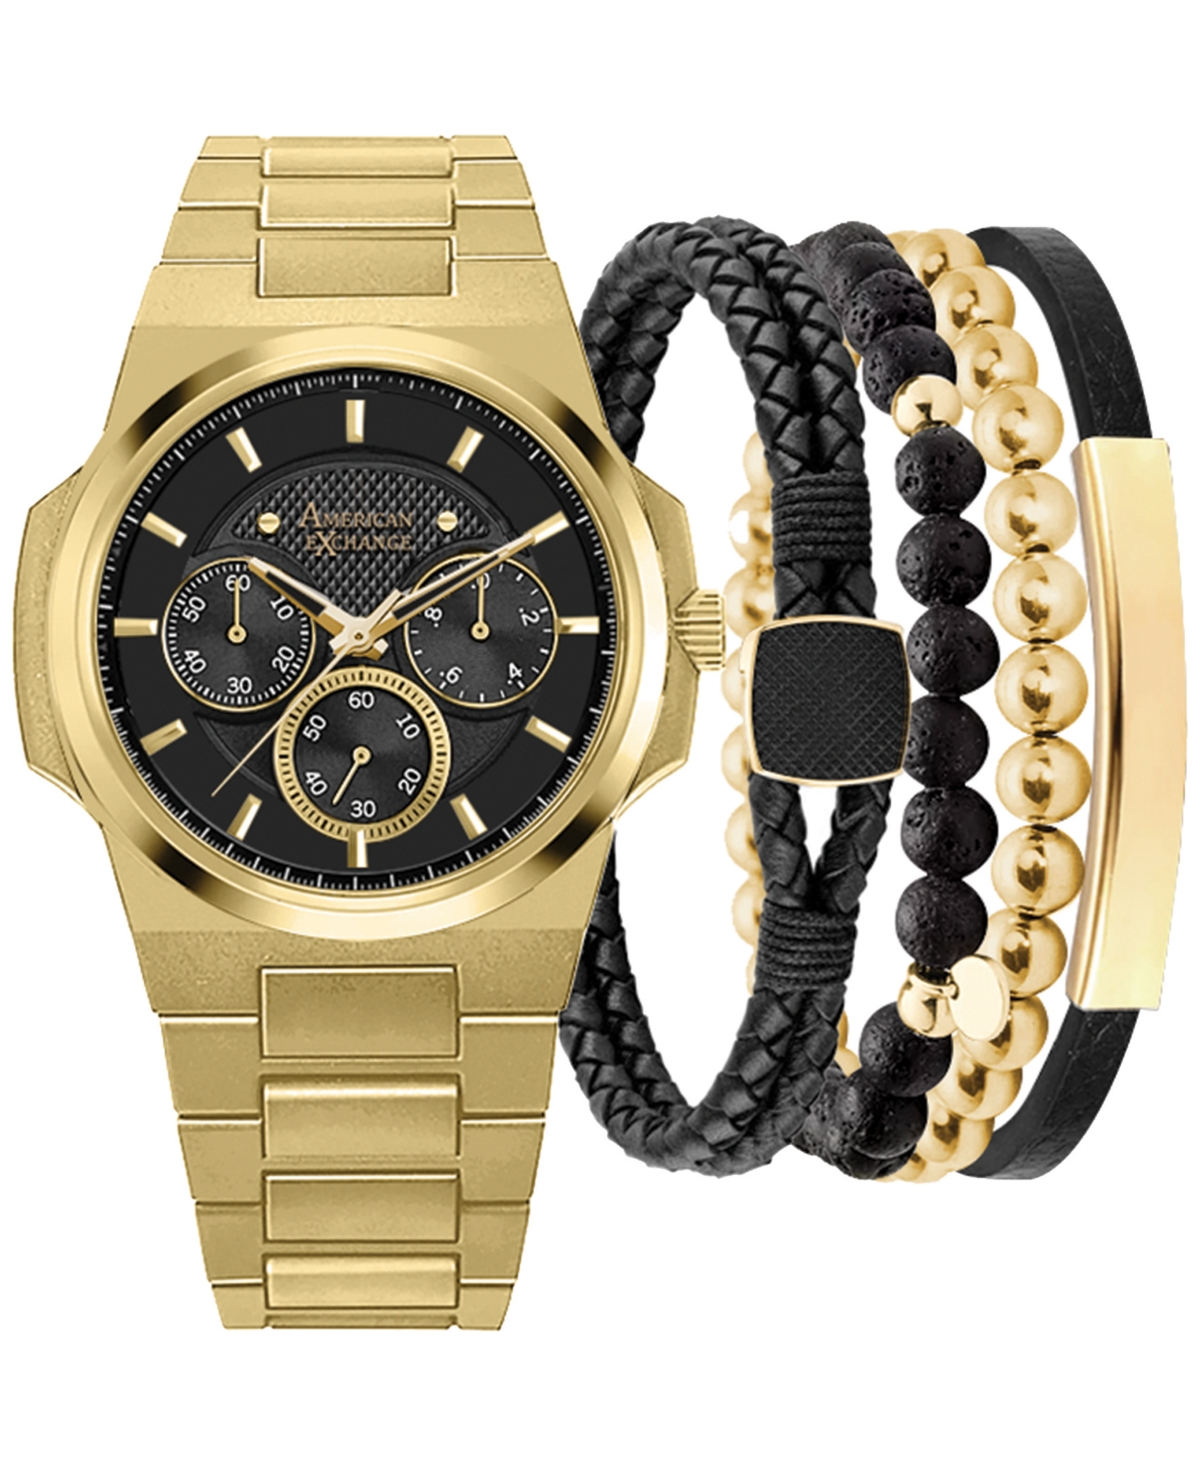 Men's Gold-Tone Metal Alloy Bracelet Watch 52mm Gift Set - Gold